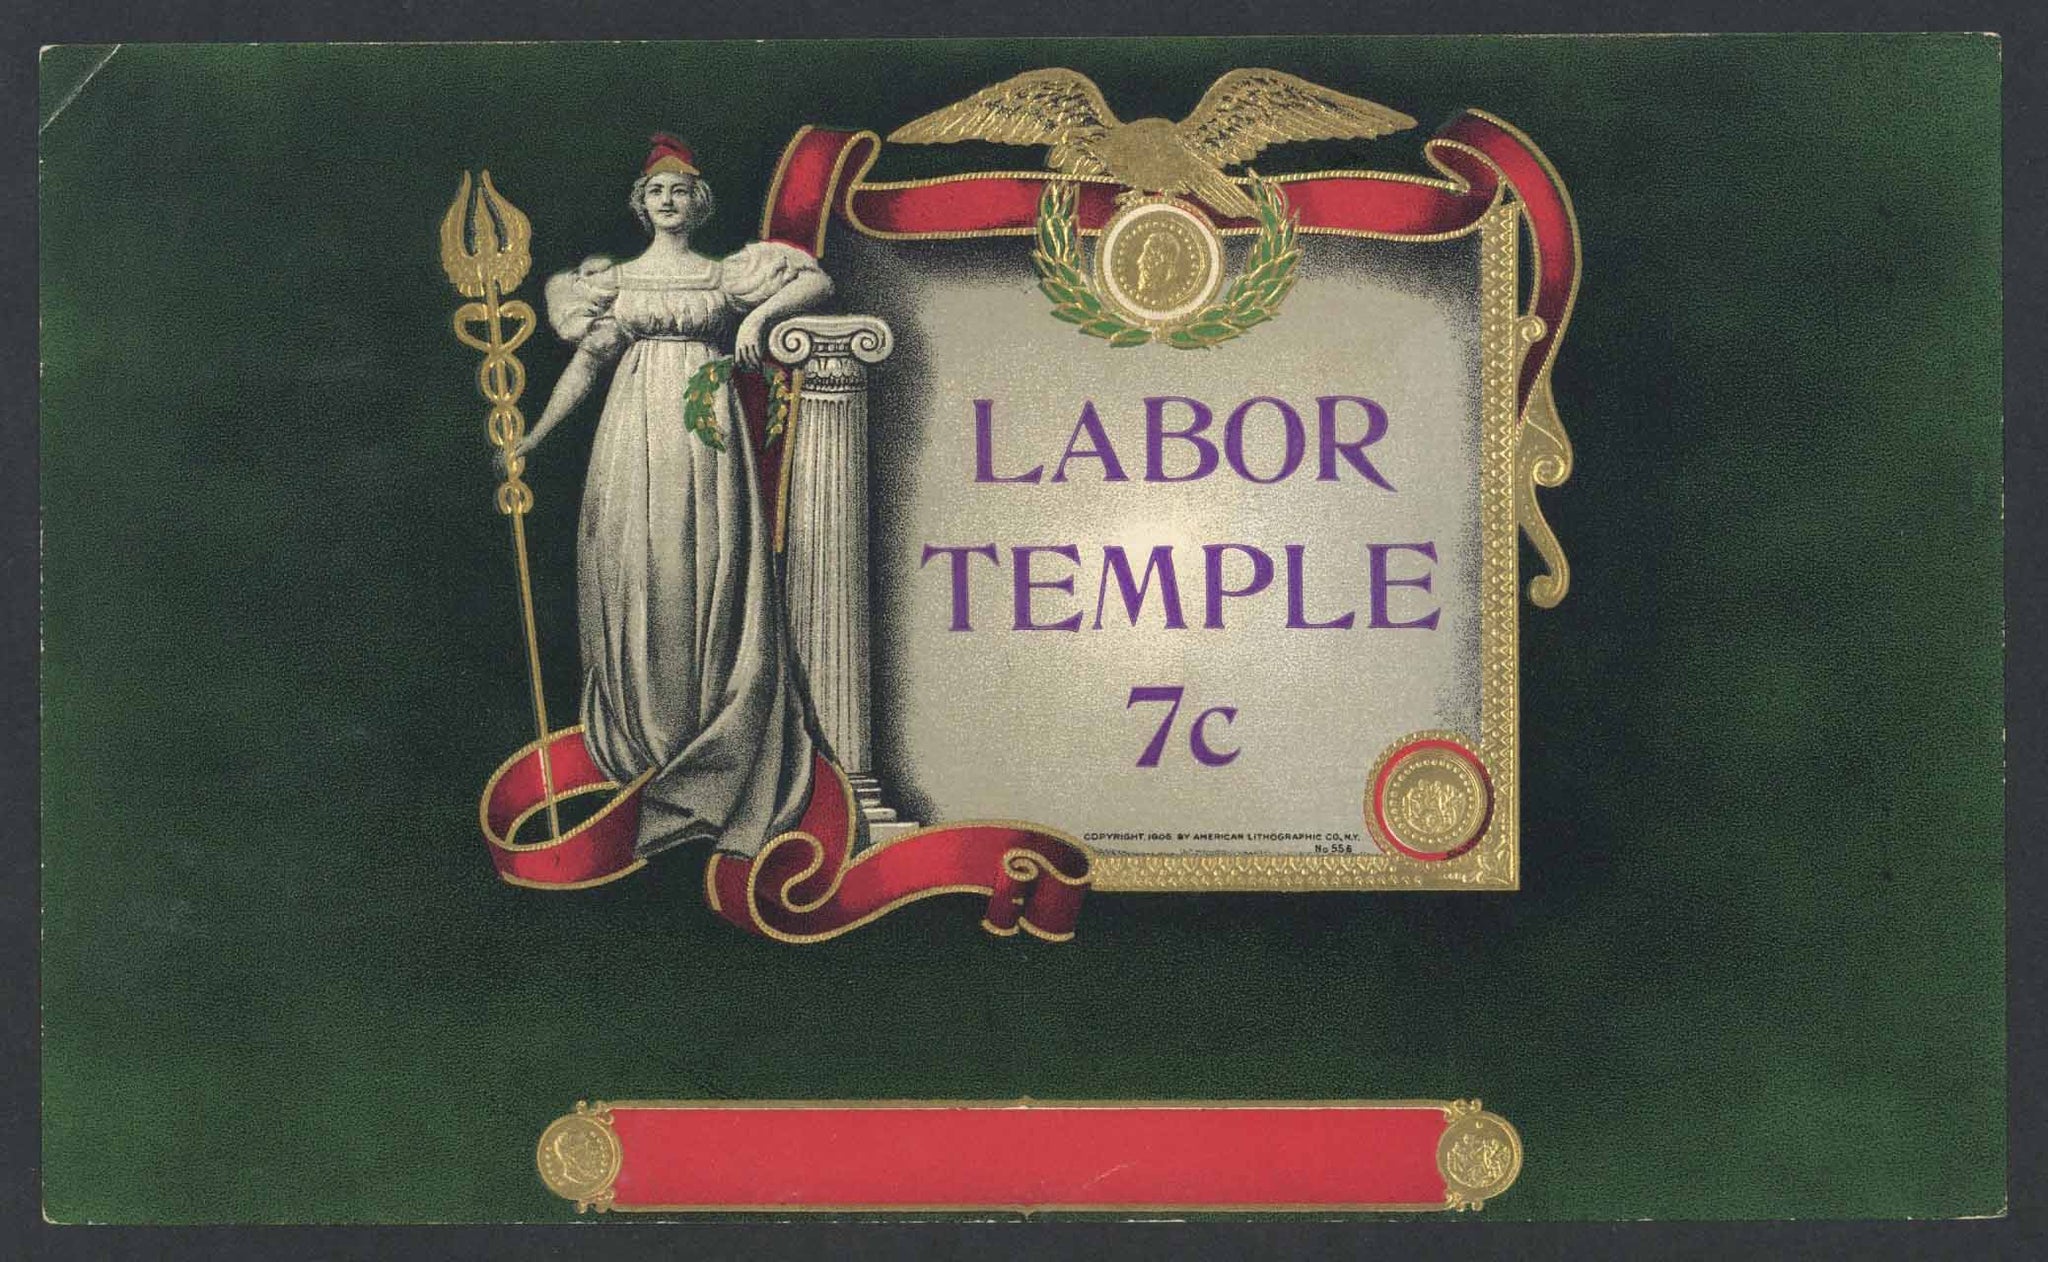 Labor Temple 7c Brand Inner Cigar Box Label